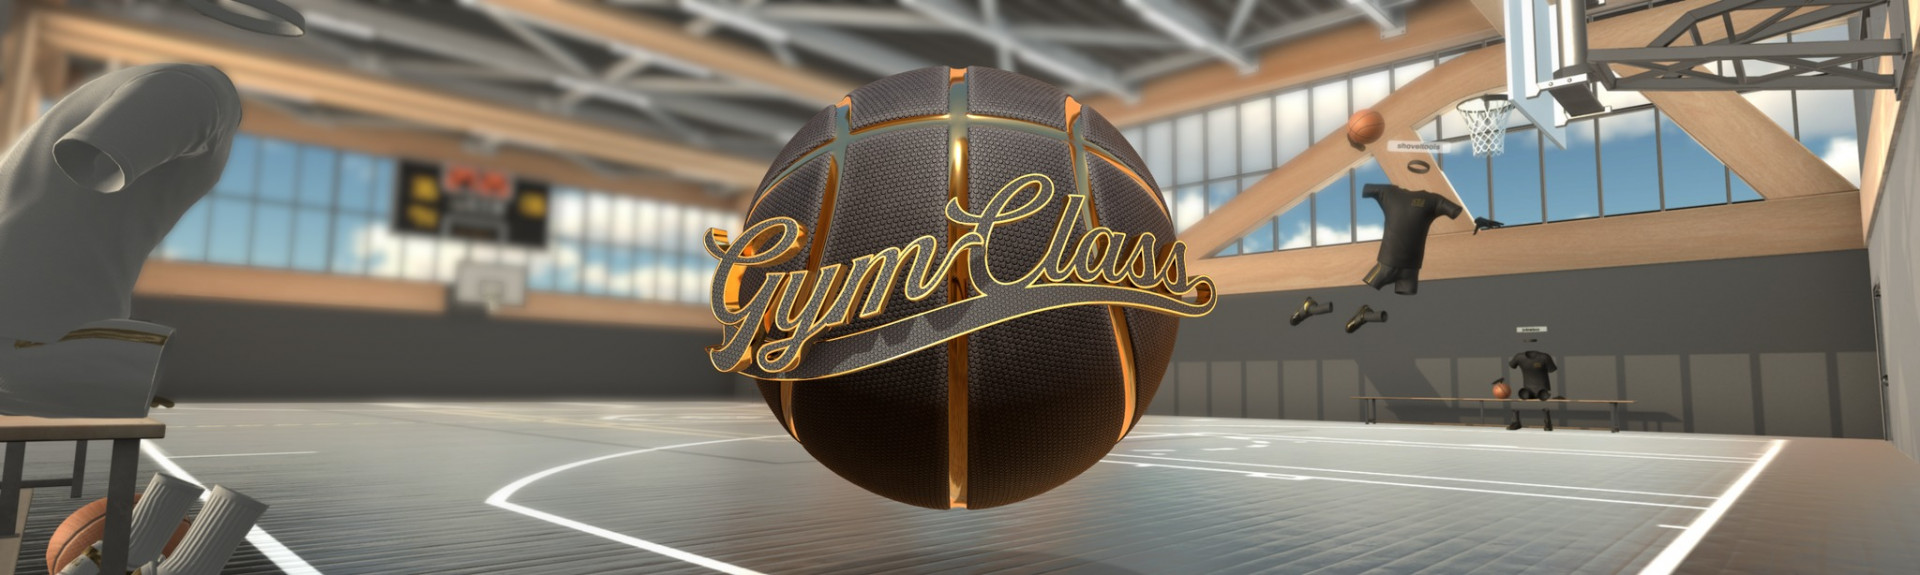 Gym Class - Basketball